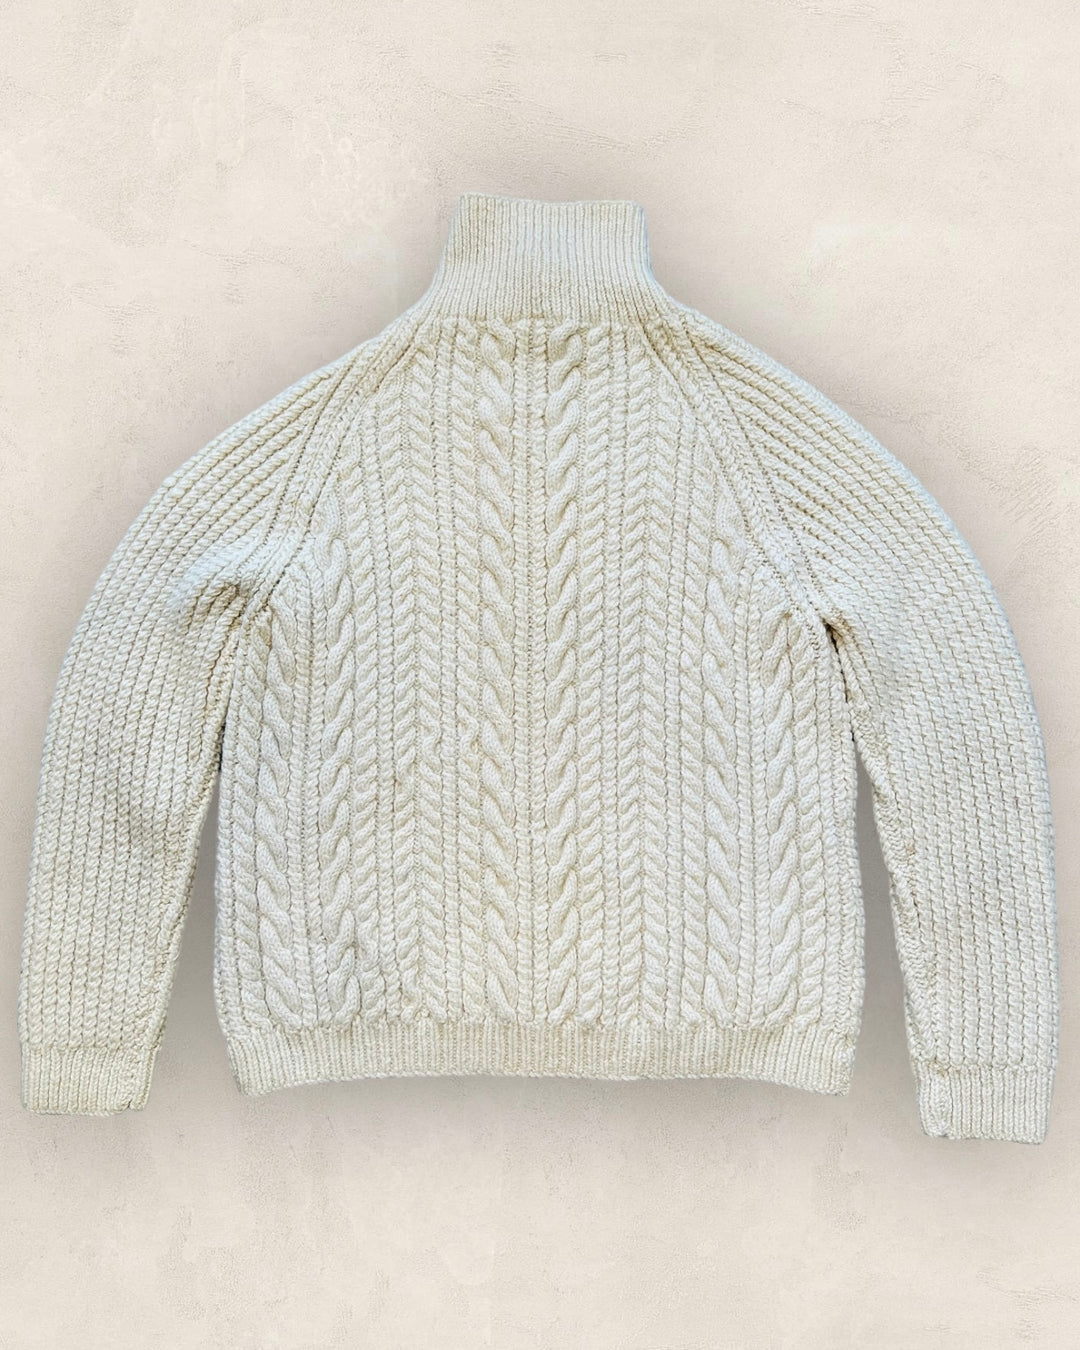 Wool turtleneck fisherman sweater - Size S/M